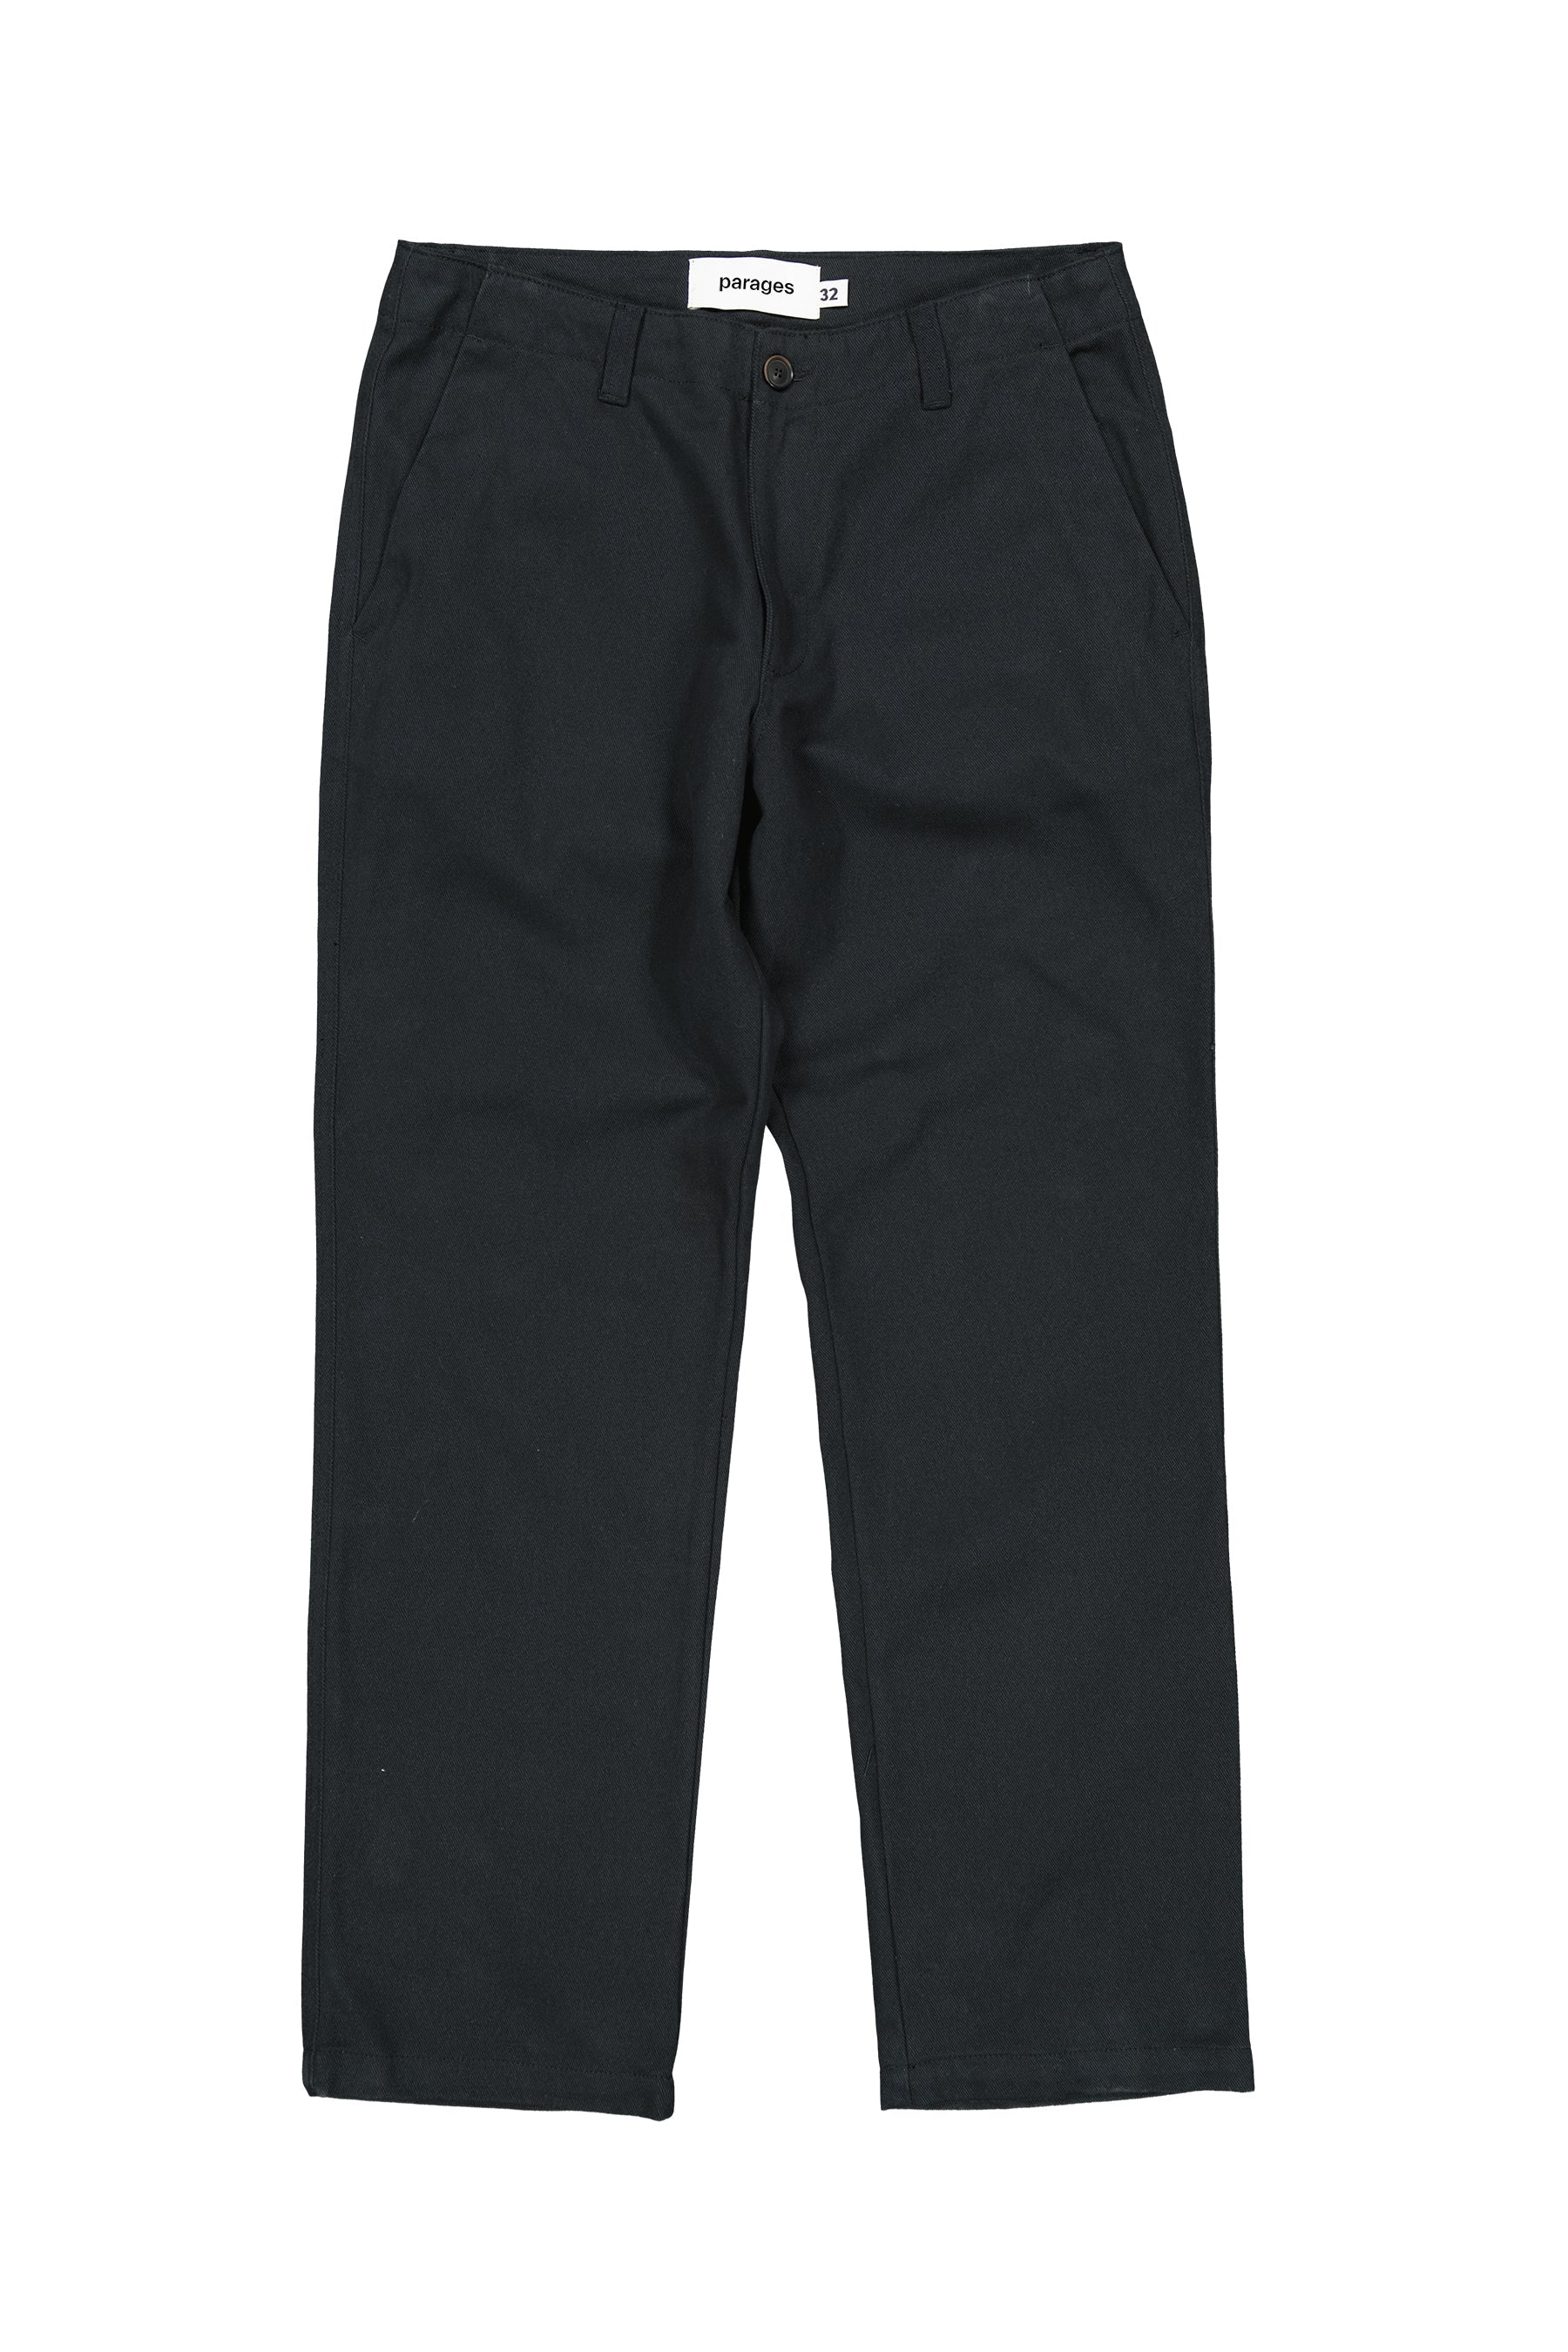 dock-twill-pantalon-workwear-noir